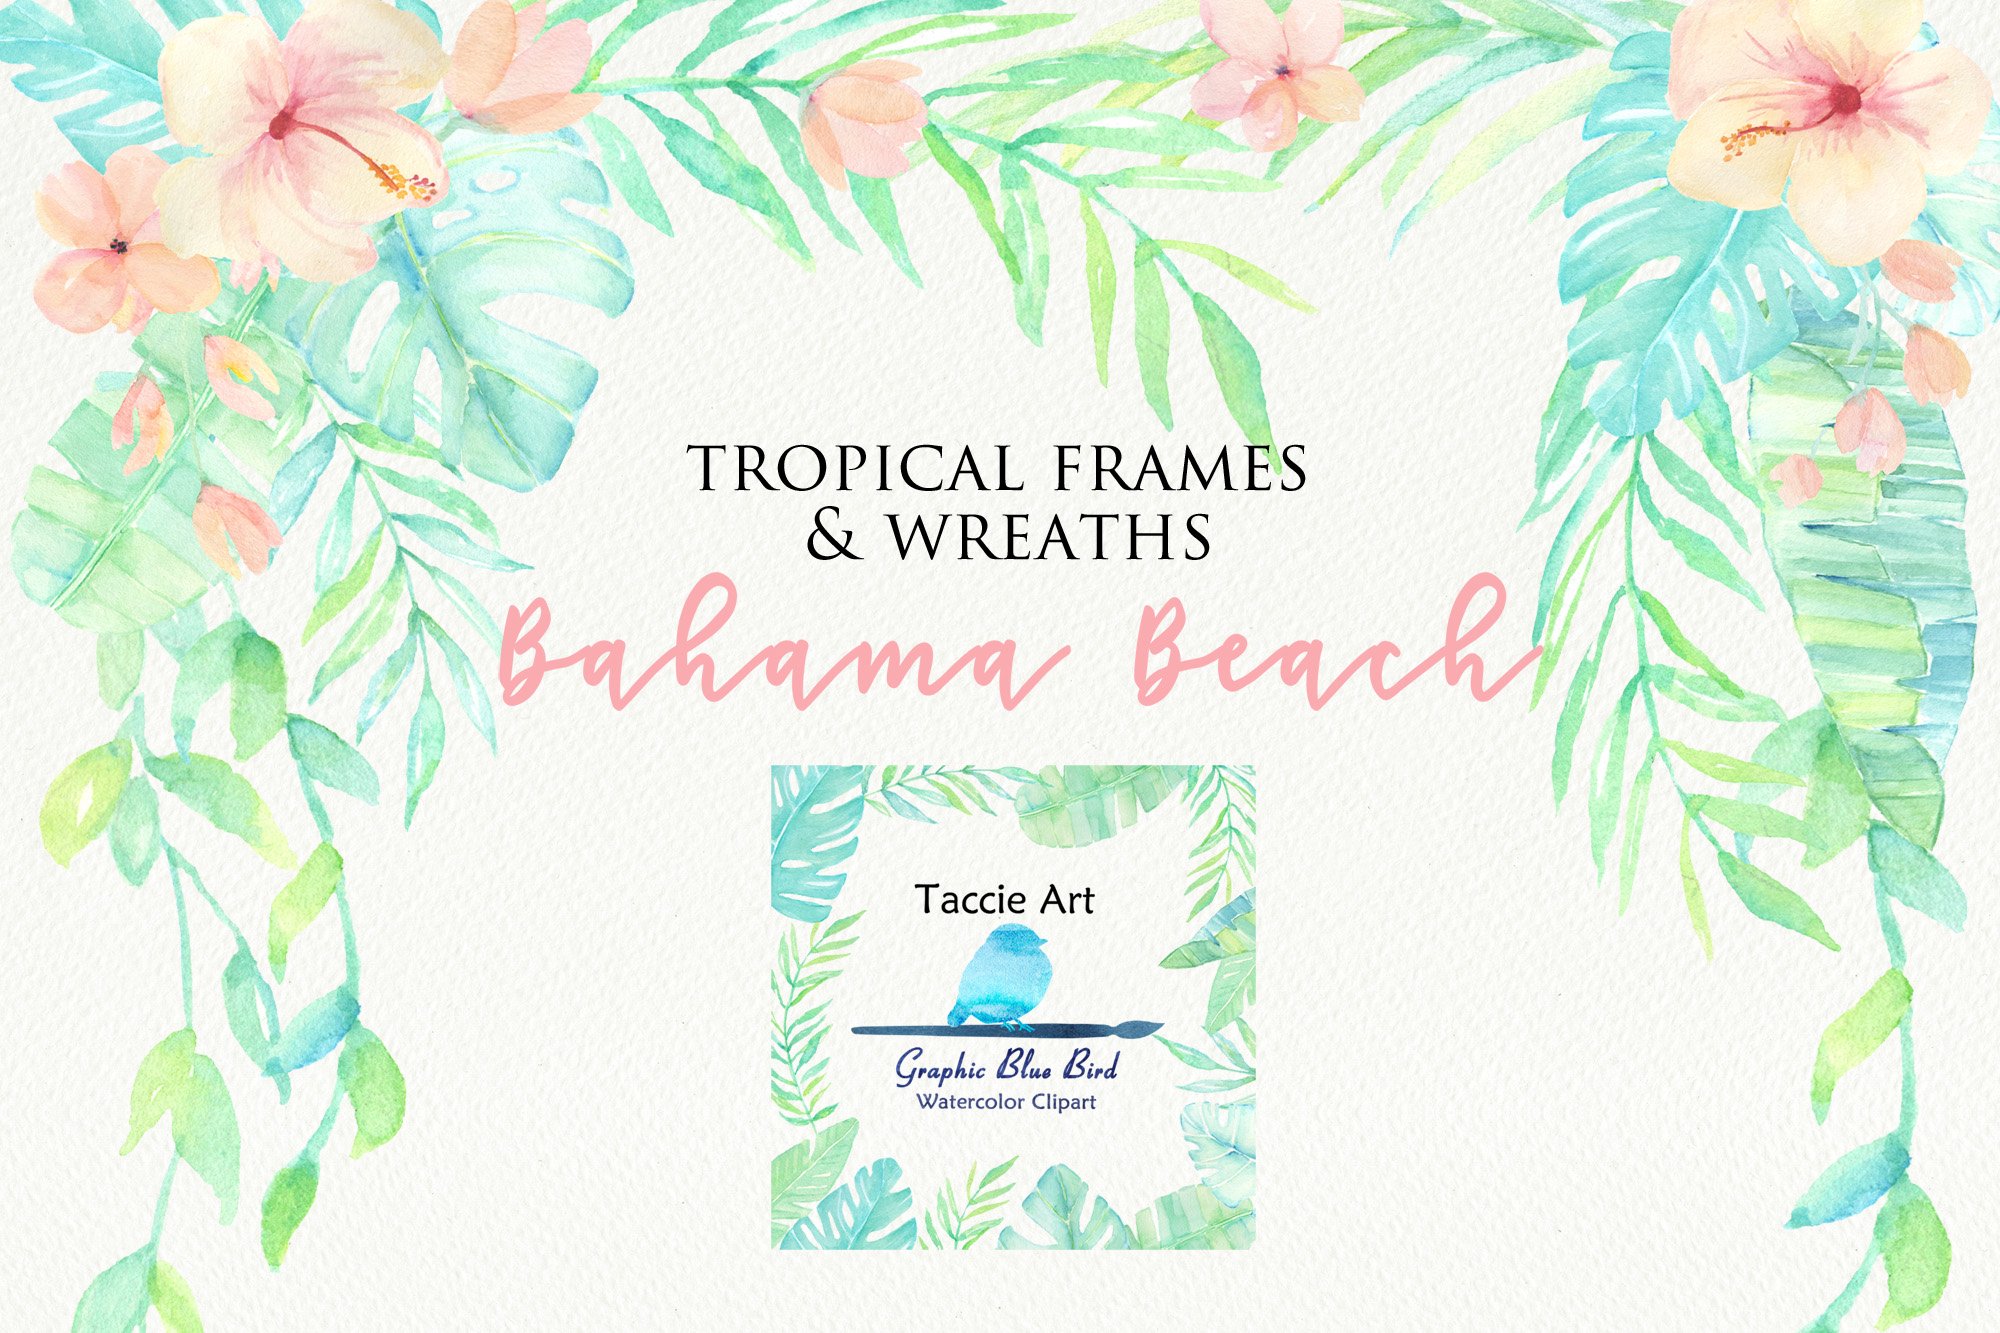 Bahama Beach Tropical Frames Clipart cover image.